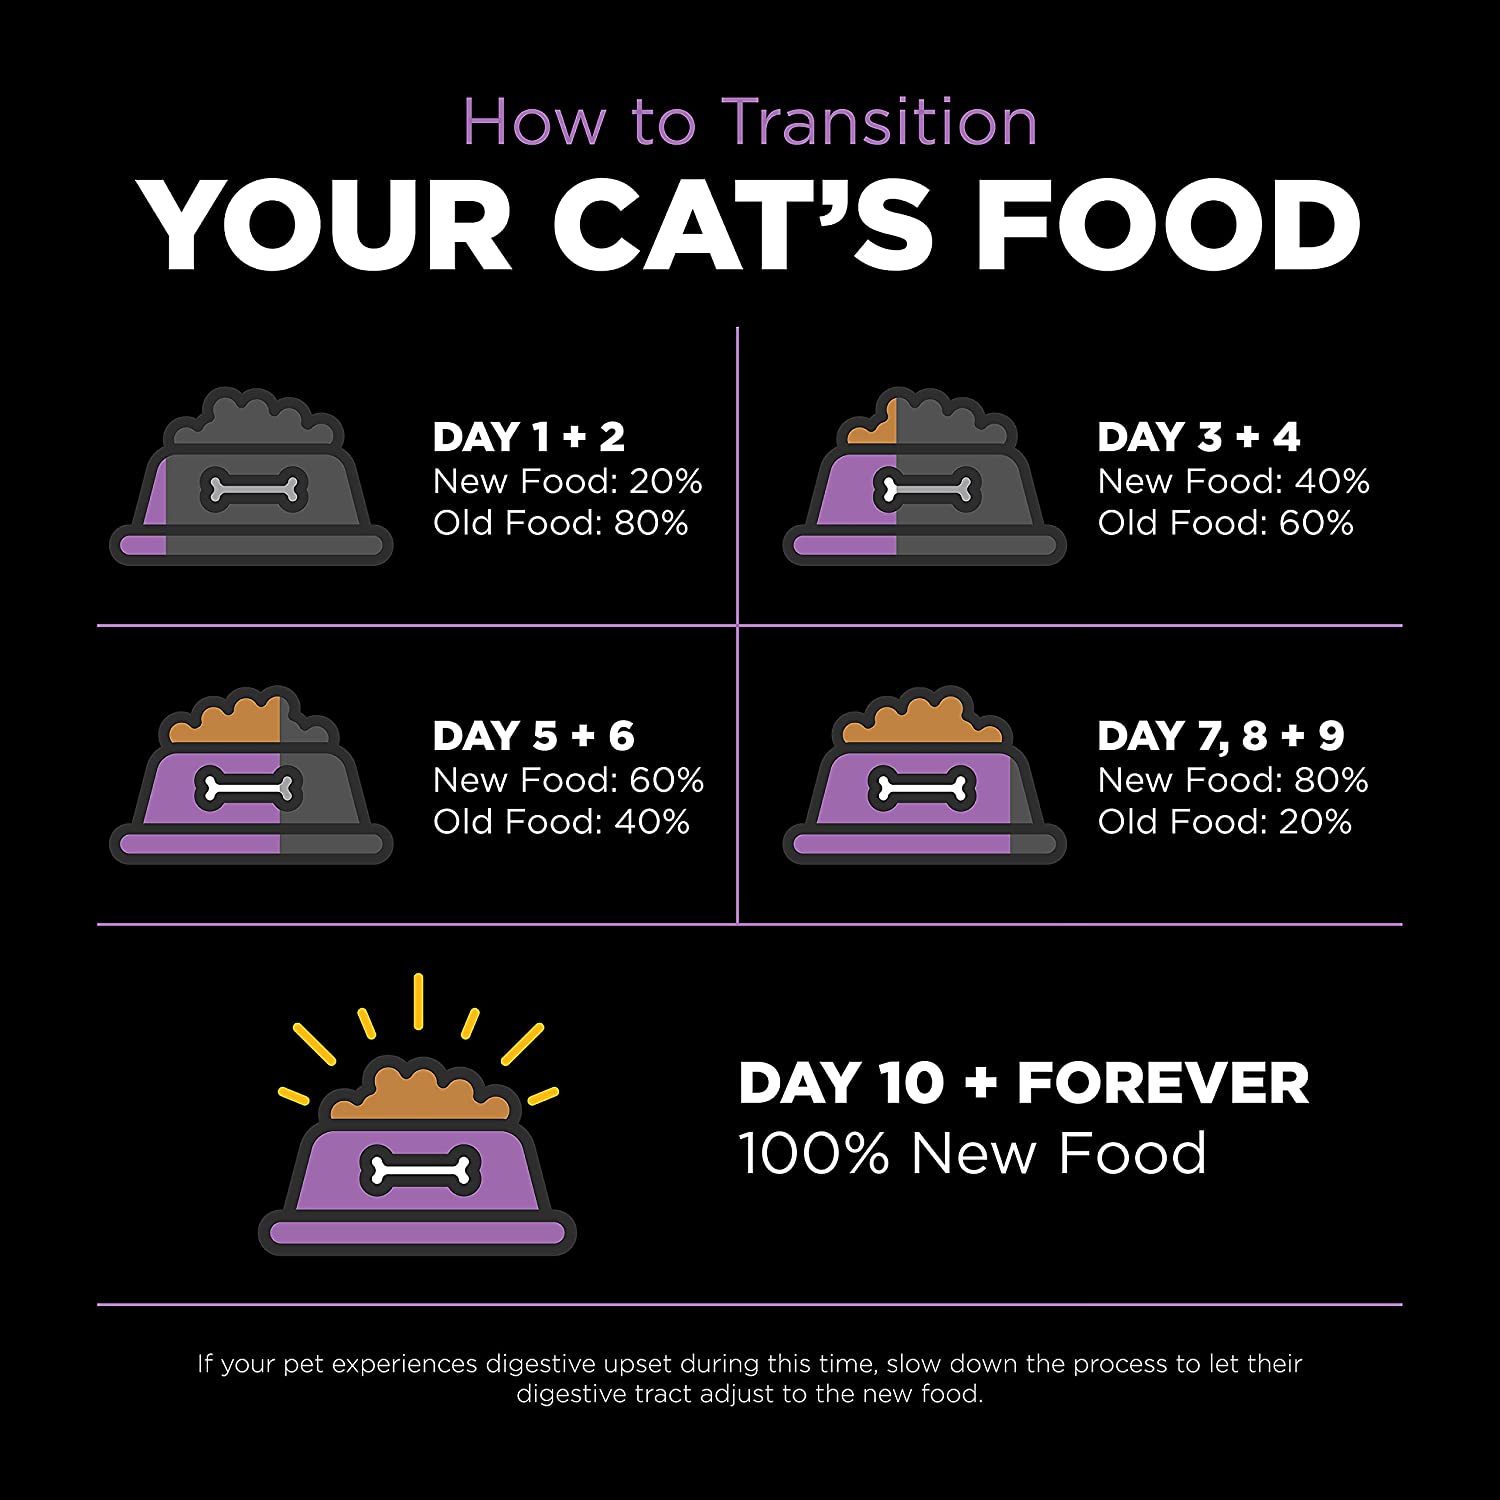 Go! Carnivore Cat Grain Free Chicken, Turkey, & Duck  Cat Food  | PetMax Canada